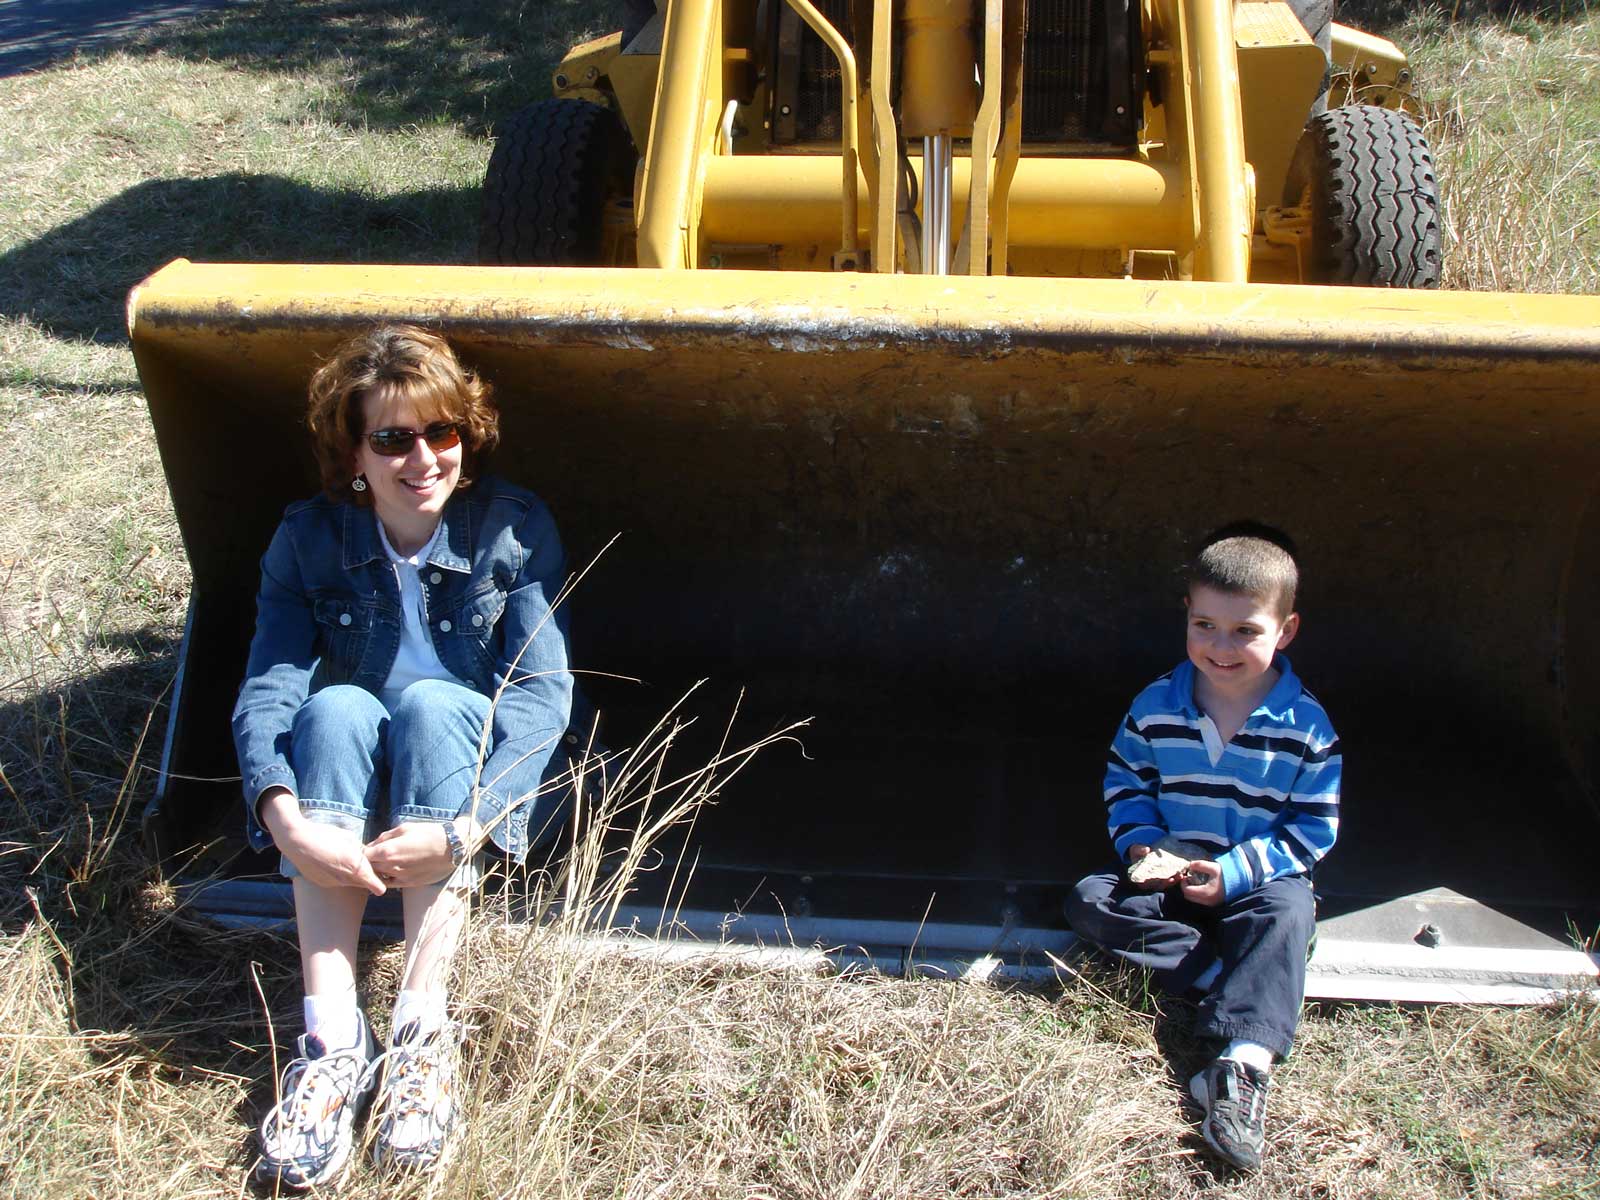 Rebecca and John in the bulldozer